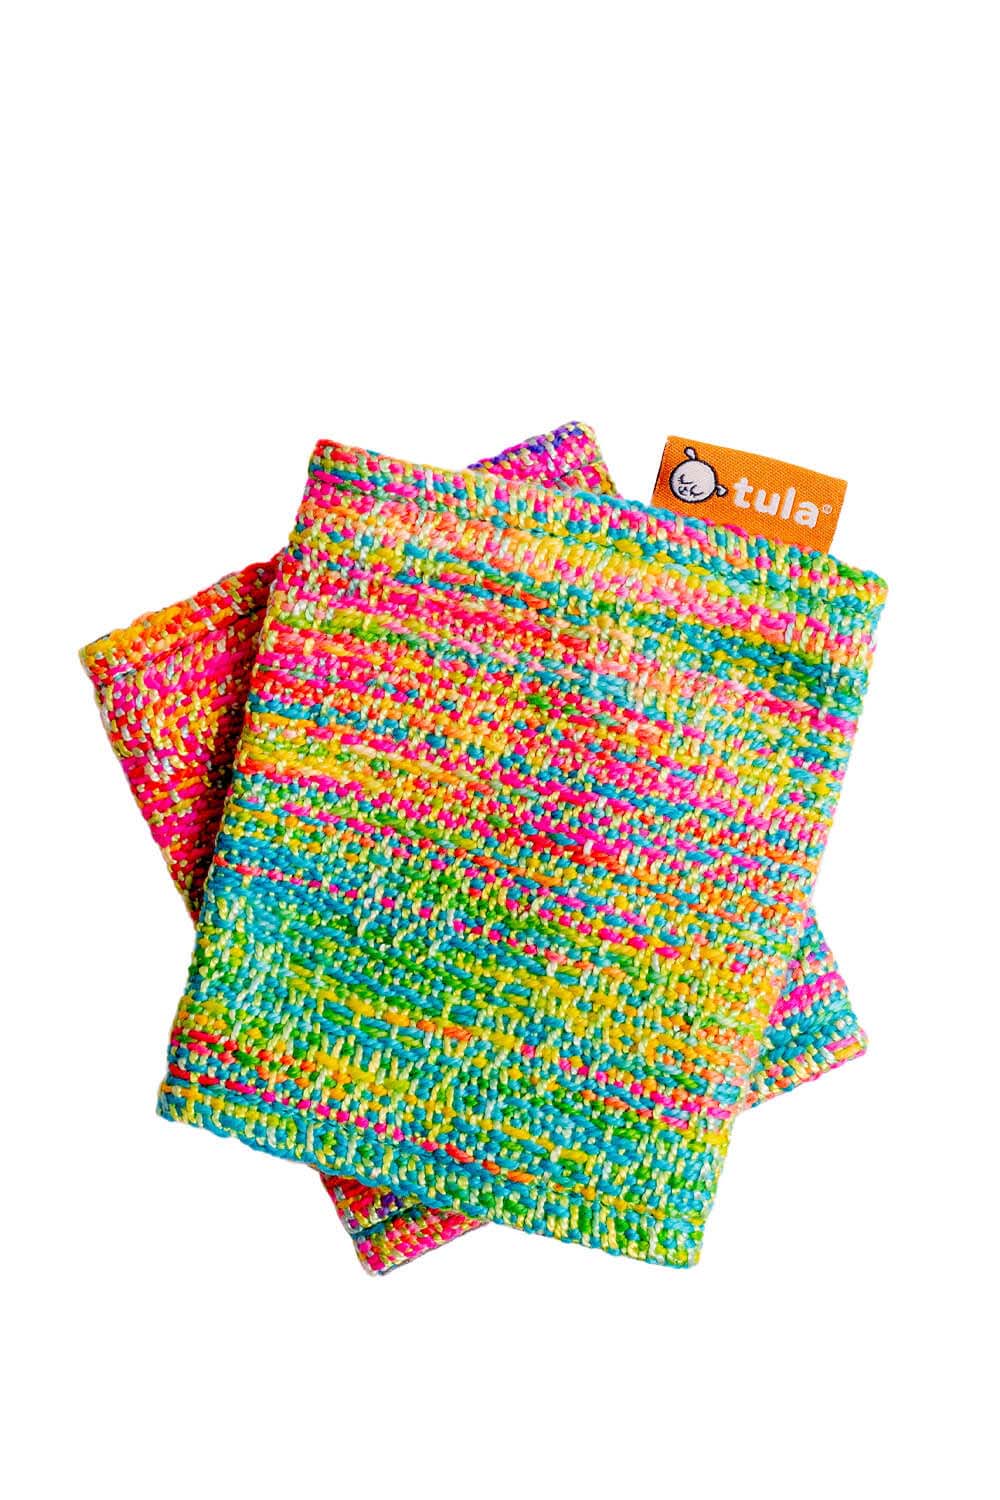 Flip Flops - Tula Signature Handwoven Strap Cover